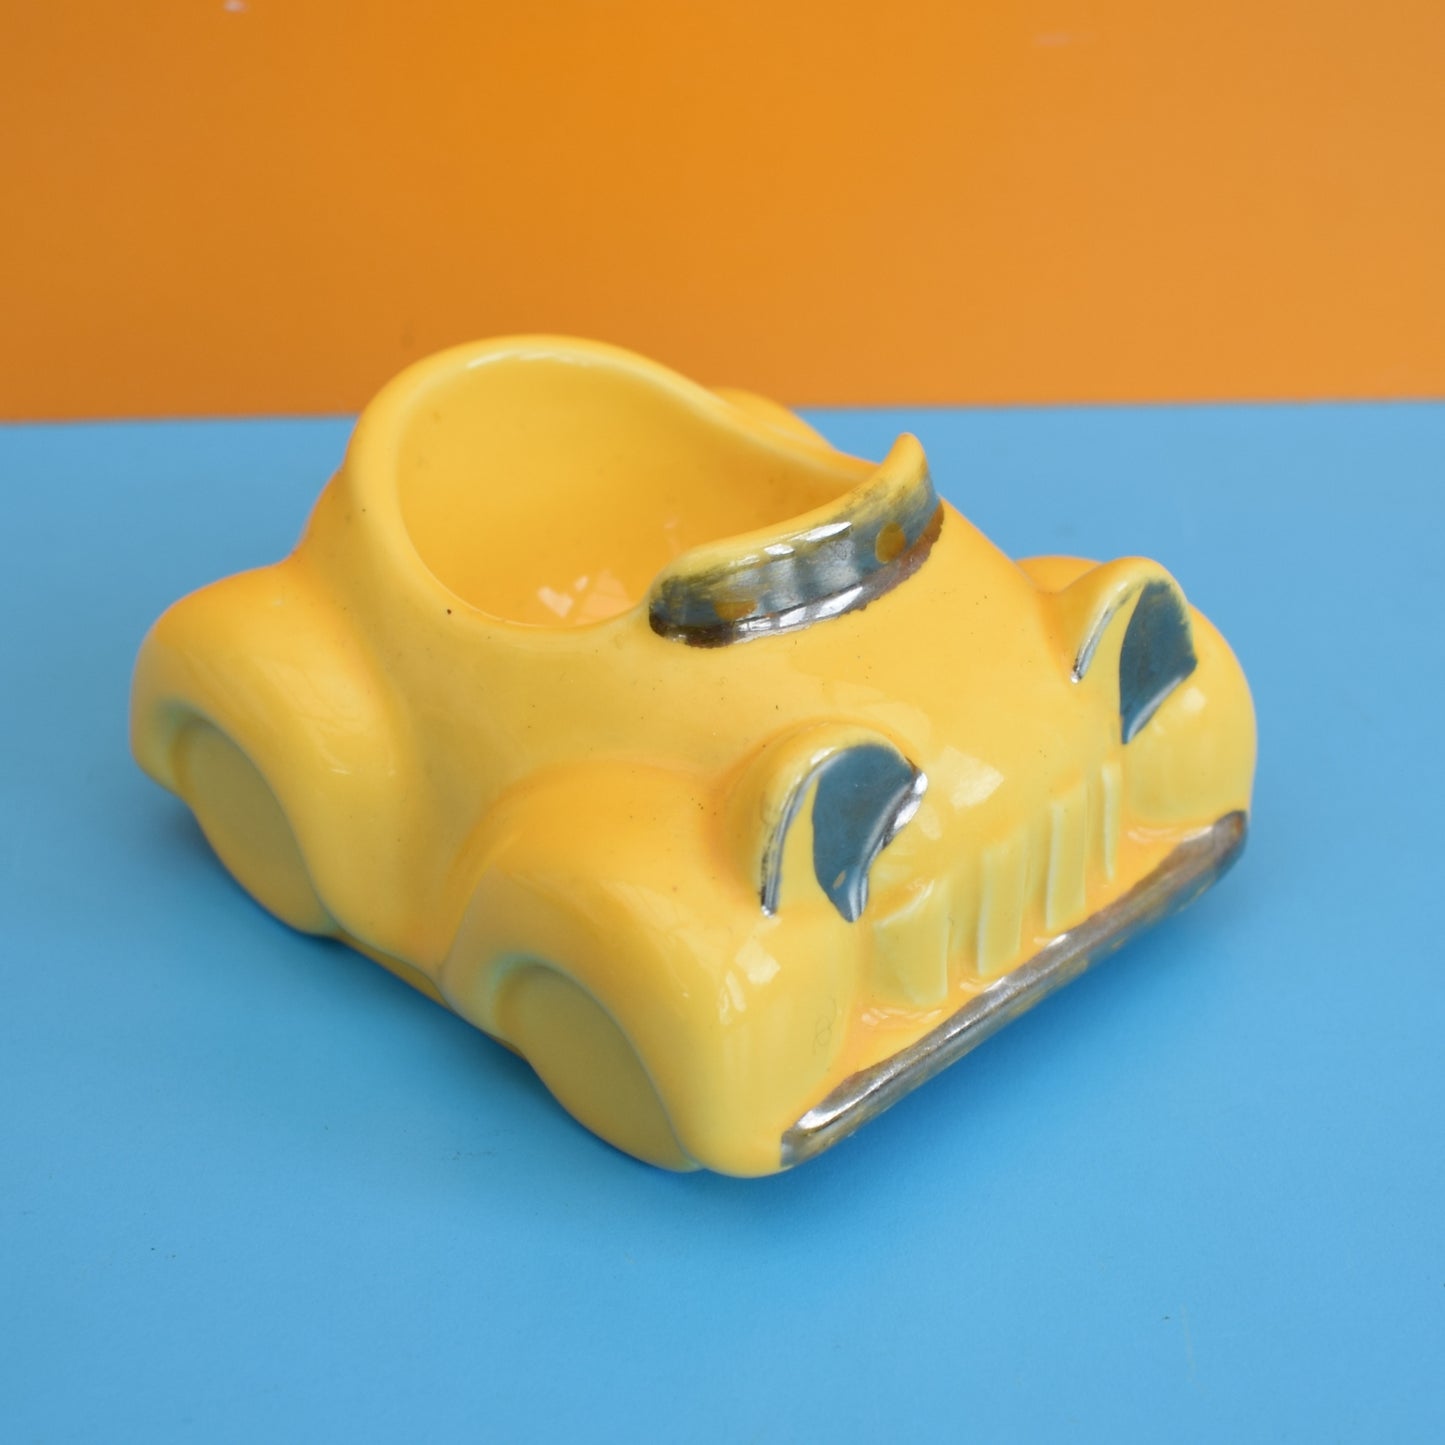 Vintage 1960s Ceramic Car Egg Cup - Honiton - Yellow